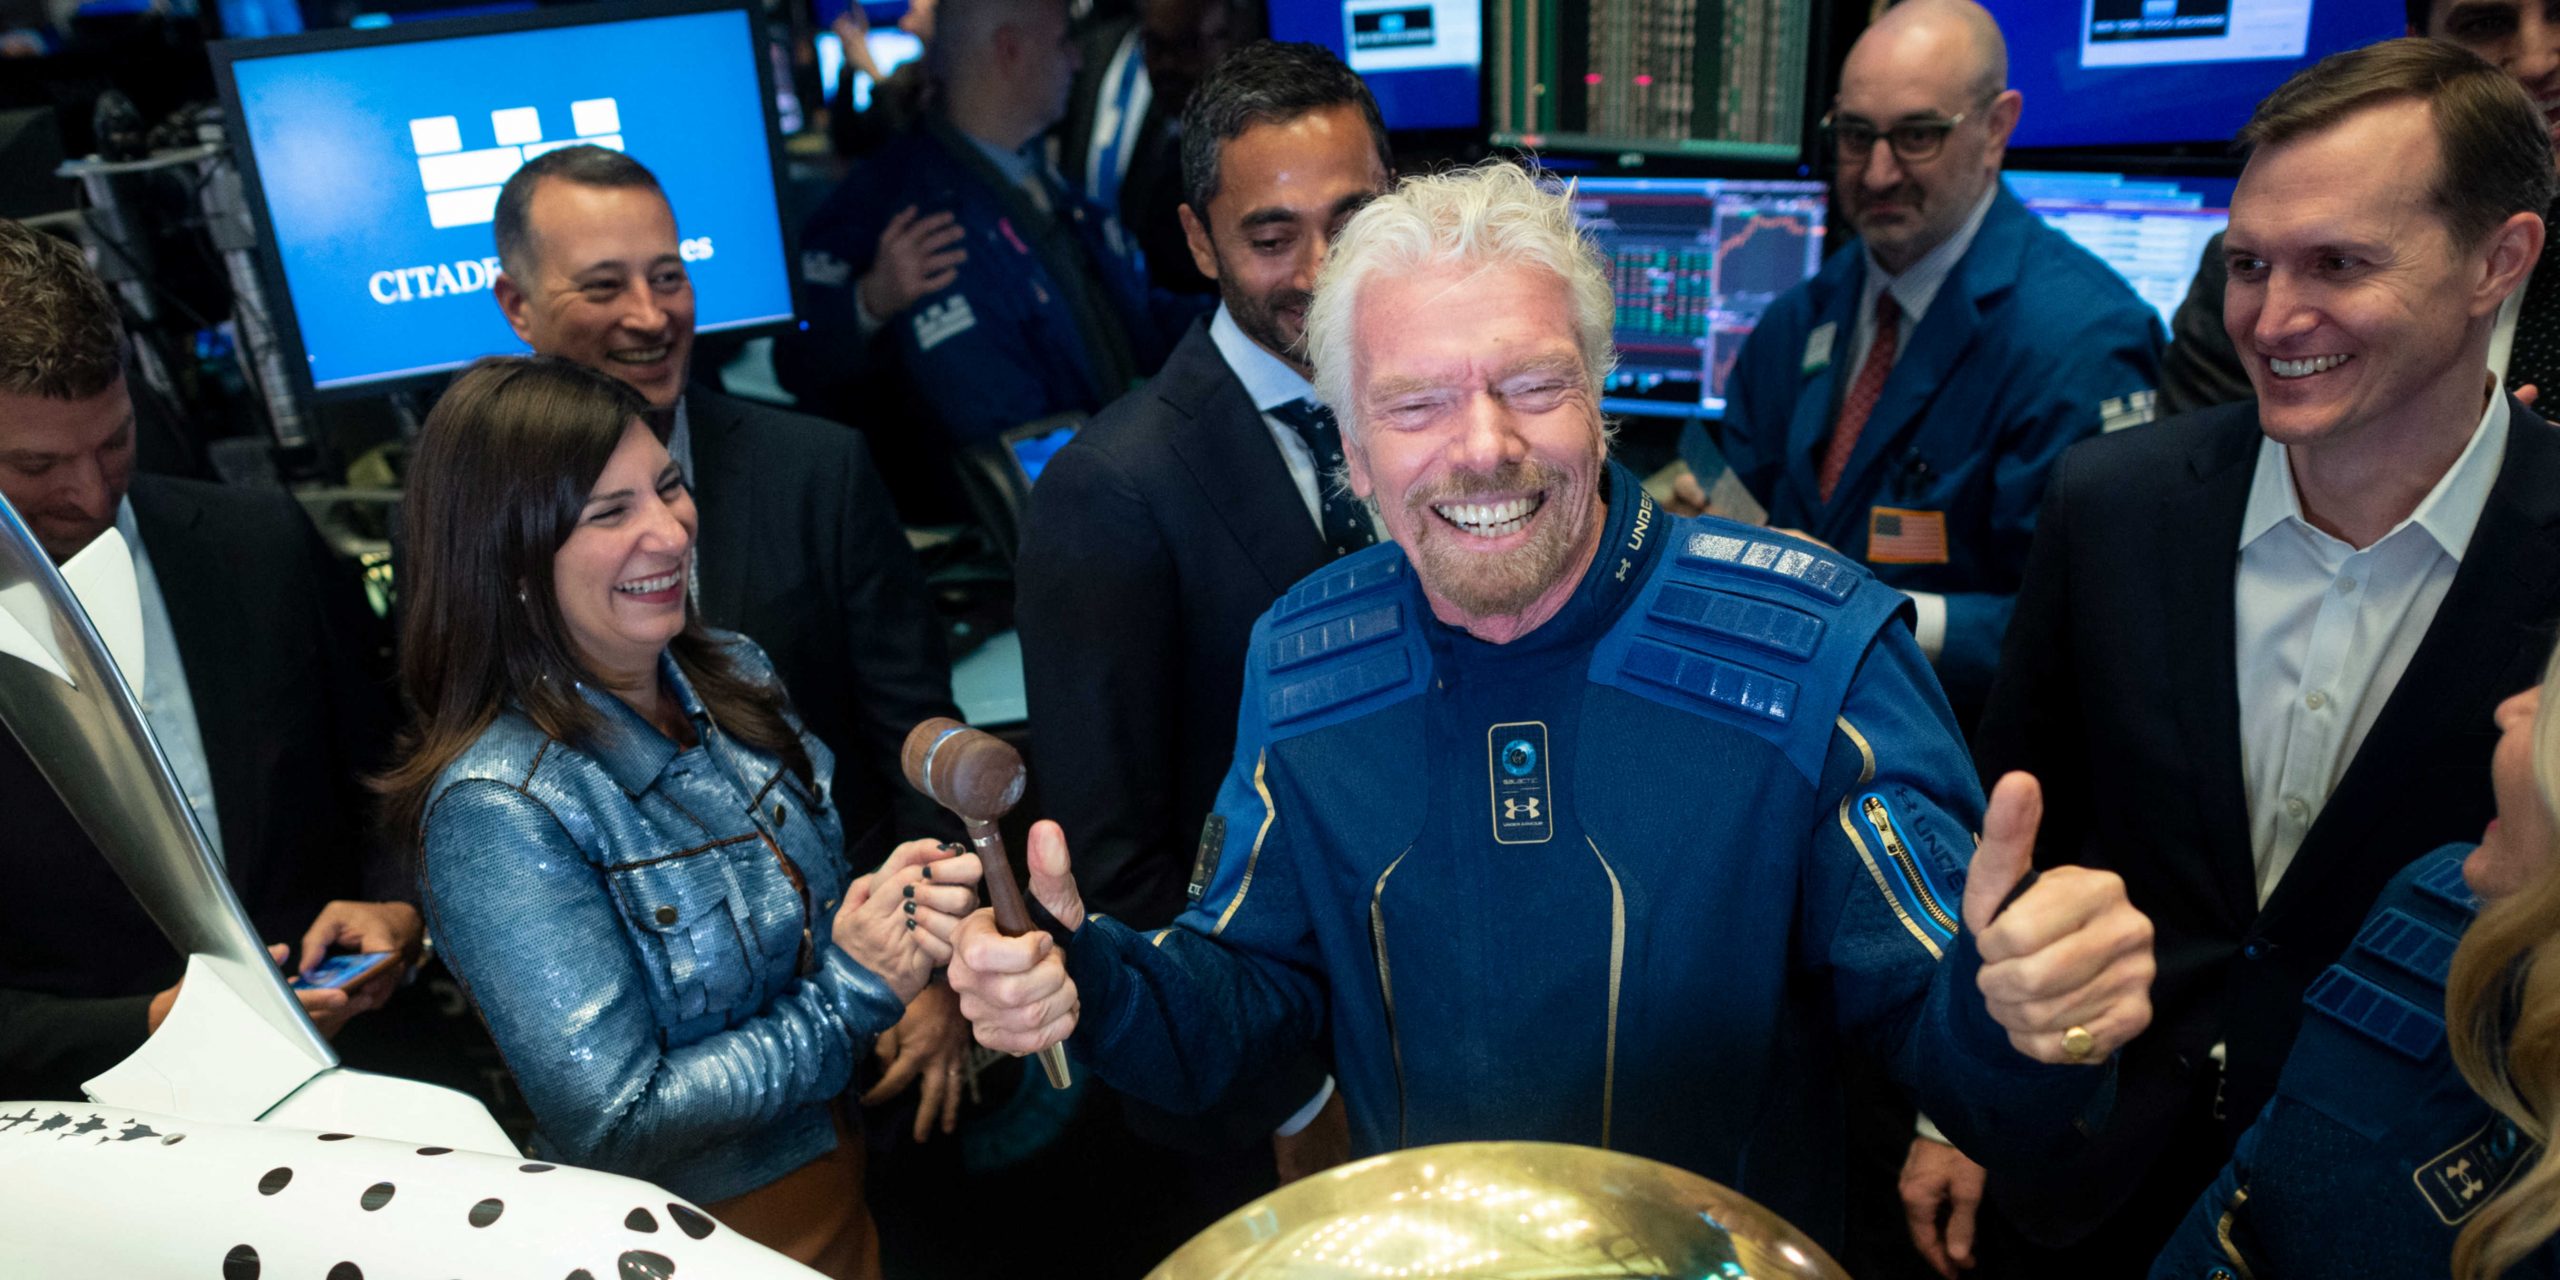 Richard Branson scaled 1 بعد رحلته الفضائية الناجحة..ريتشارد برانسون يقود الطريق إلى السياحة الفضائية مجلة نقطة العلمية